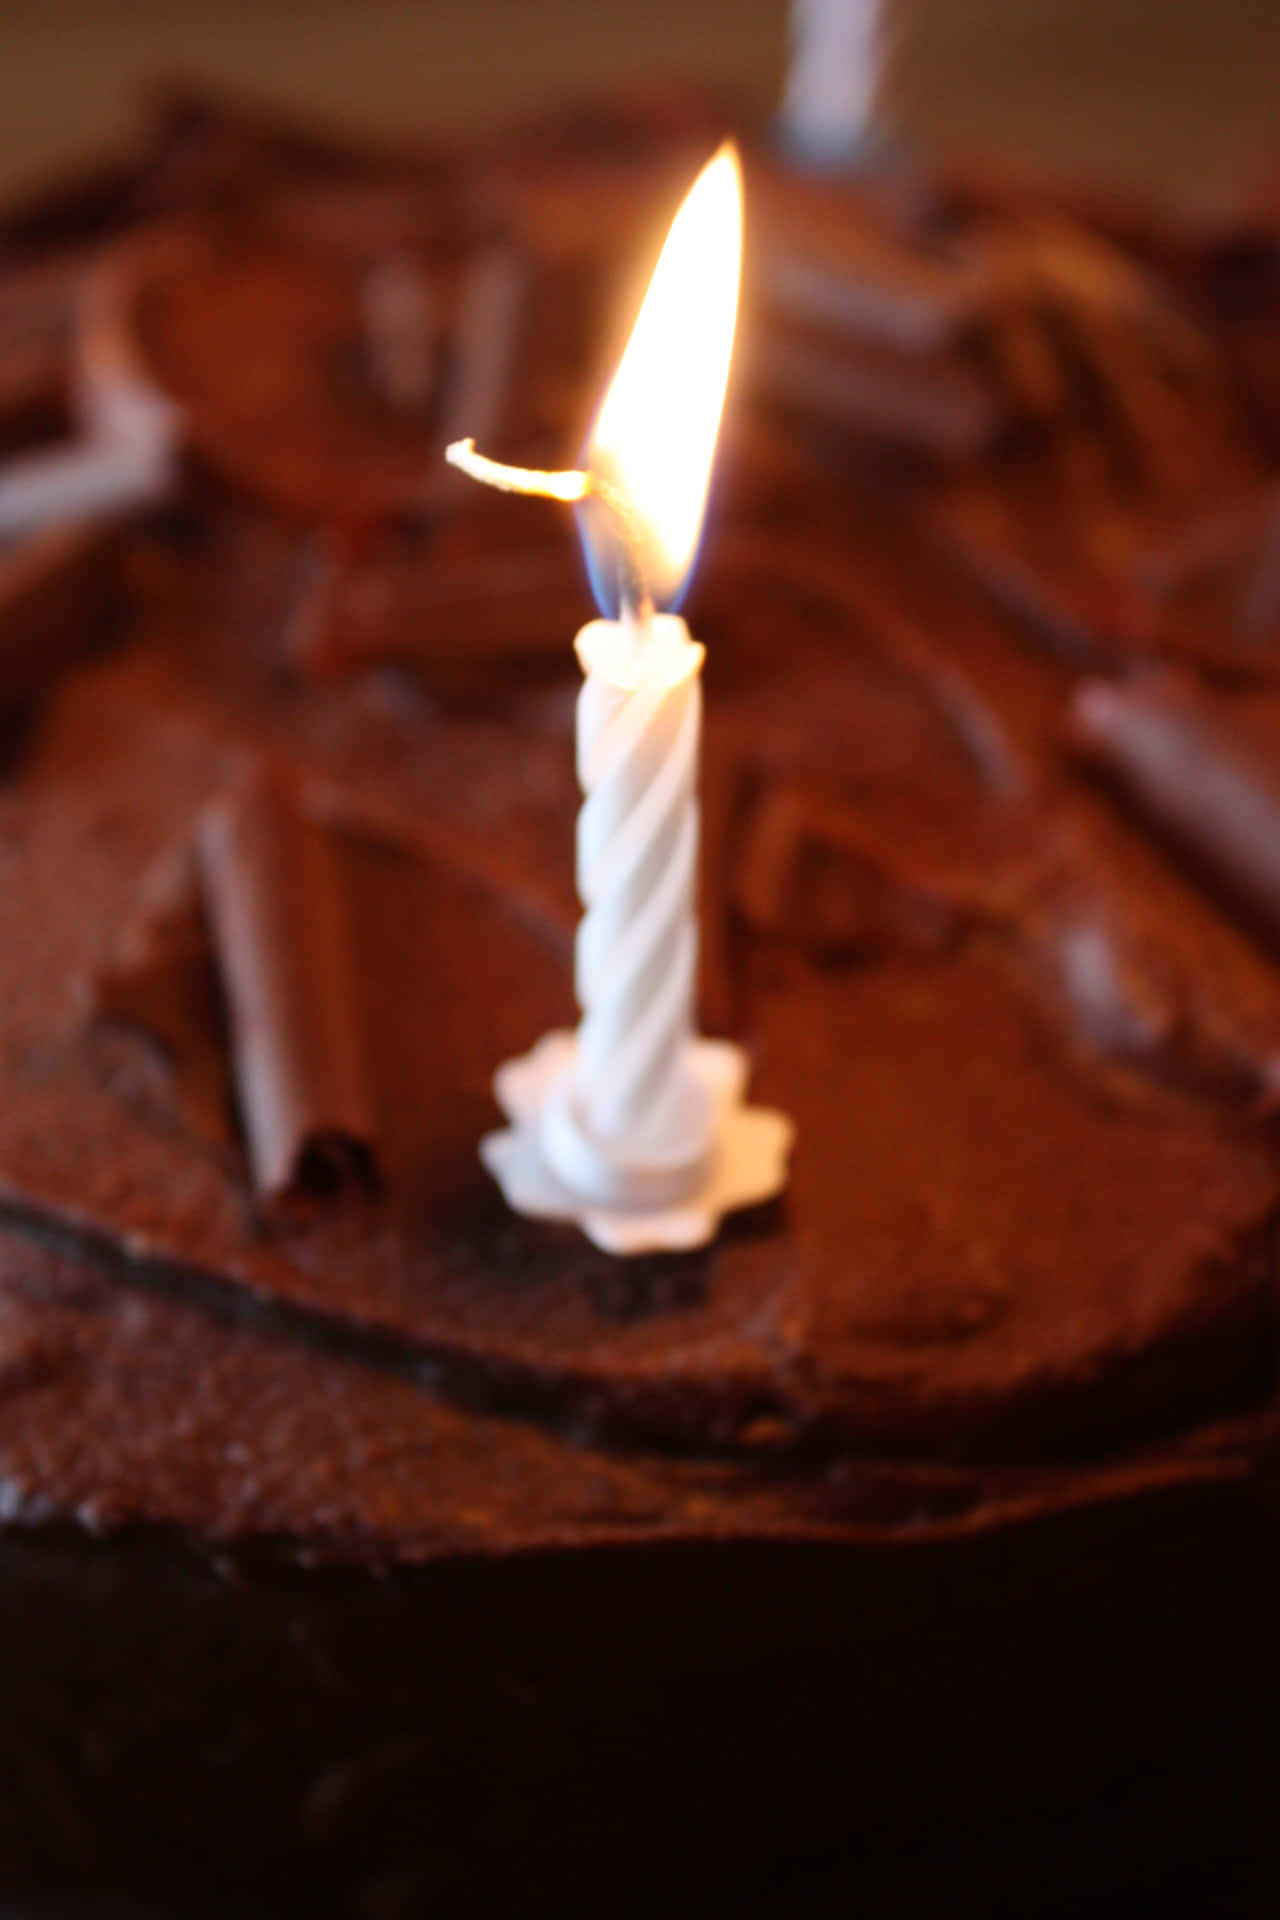 A Chocolate Cake With A Single Candle